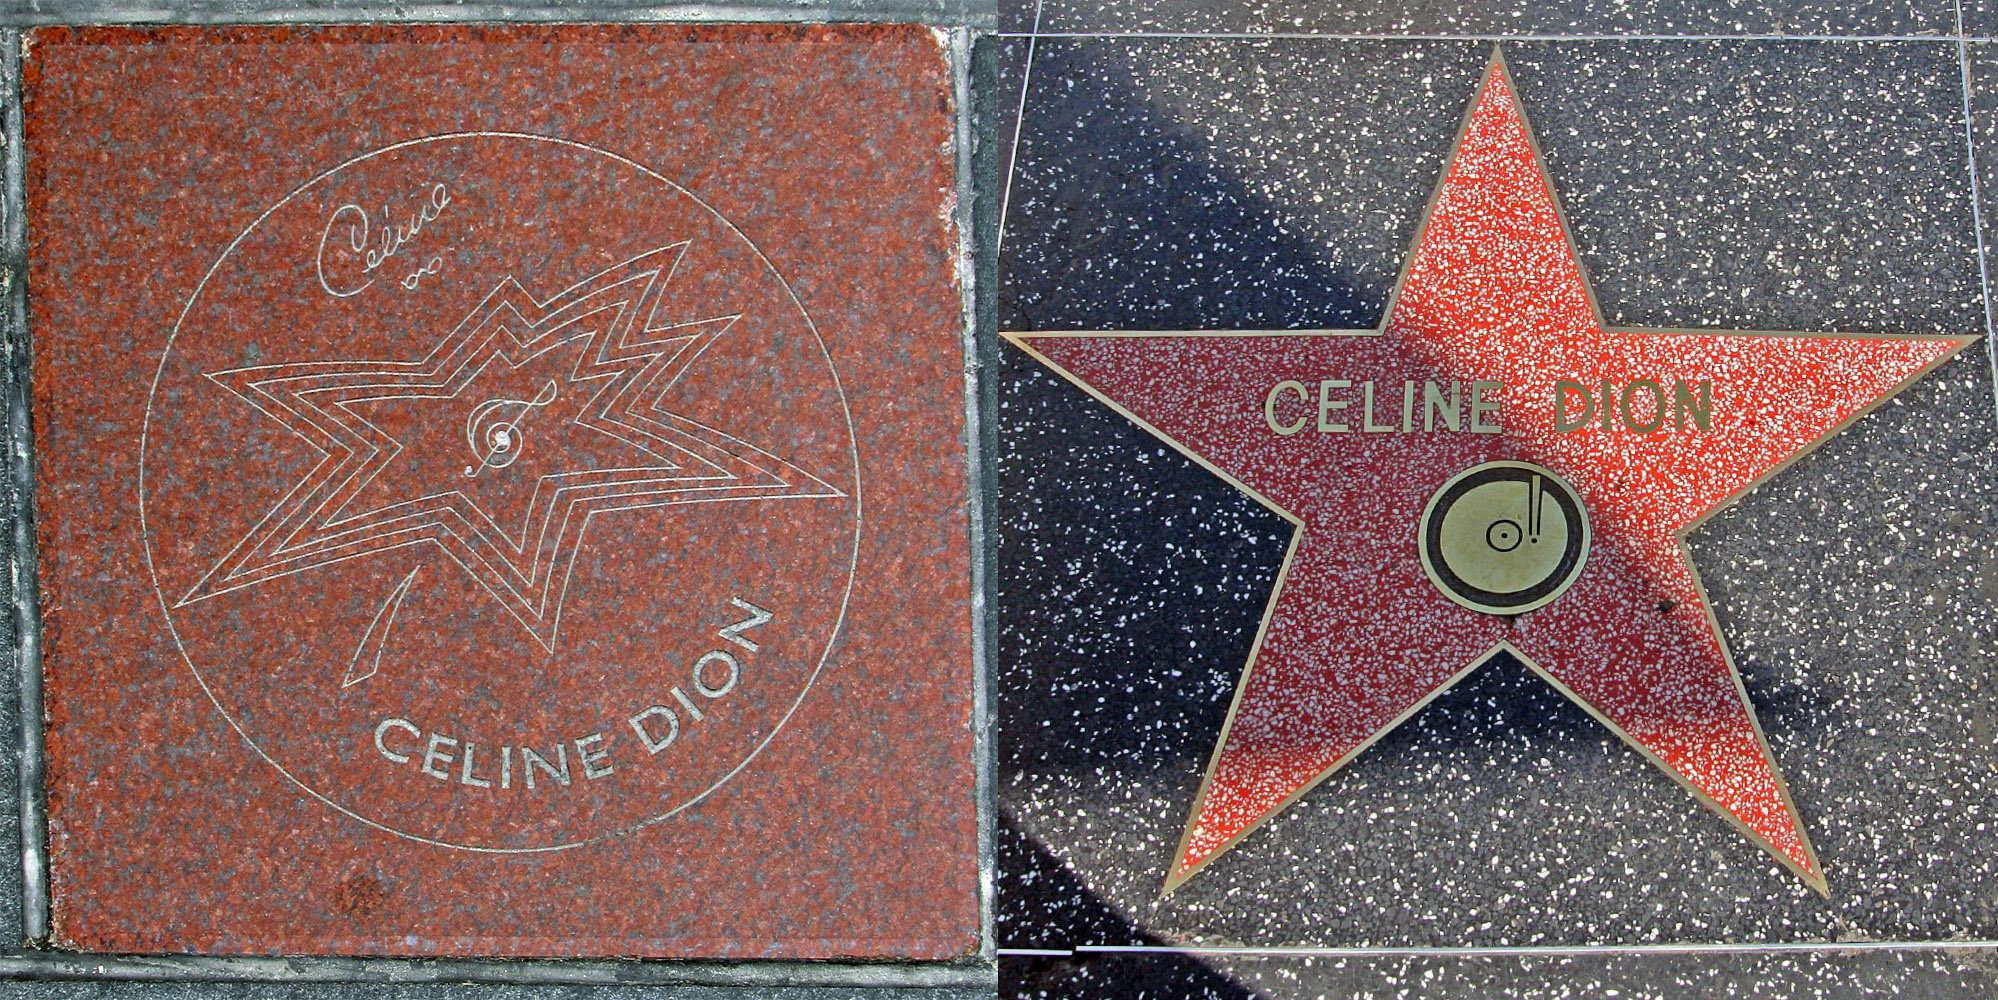 Celine Dion - Wikipedia, the free encyclopedia